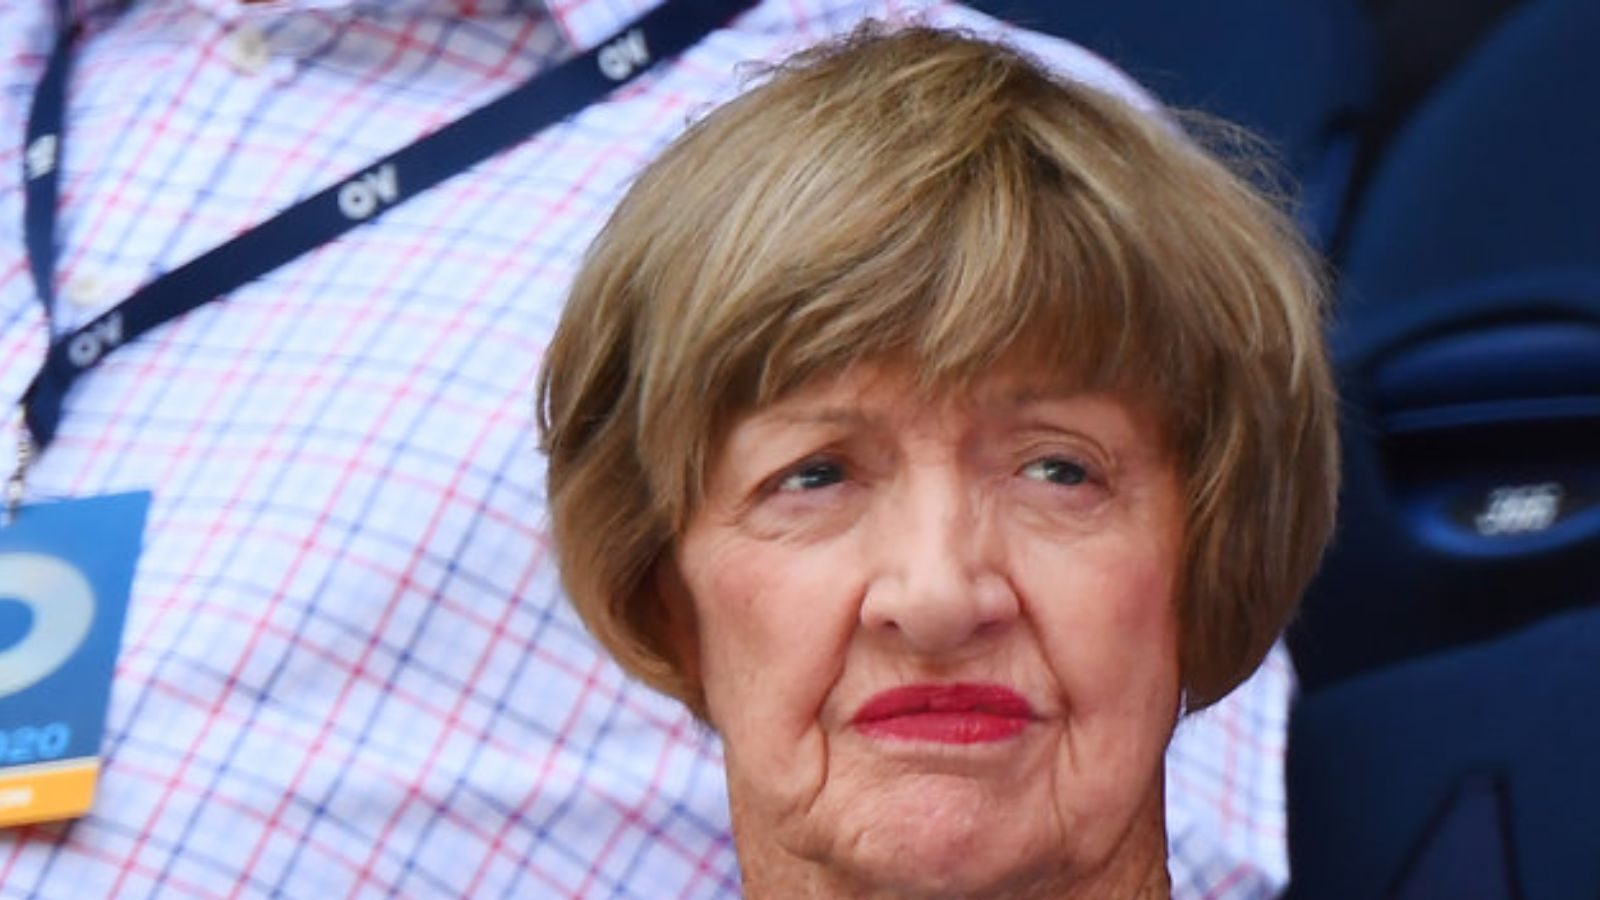 Australian Tennis Legend Margaret Court’s Home Targeted in Burglary, According to Report